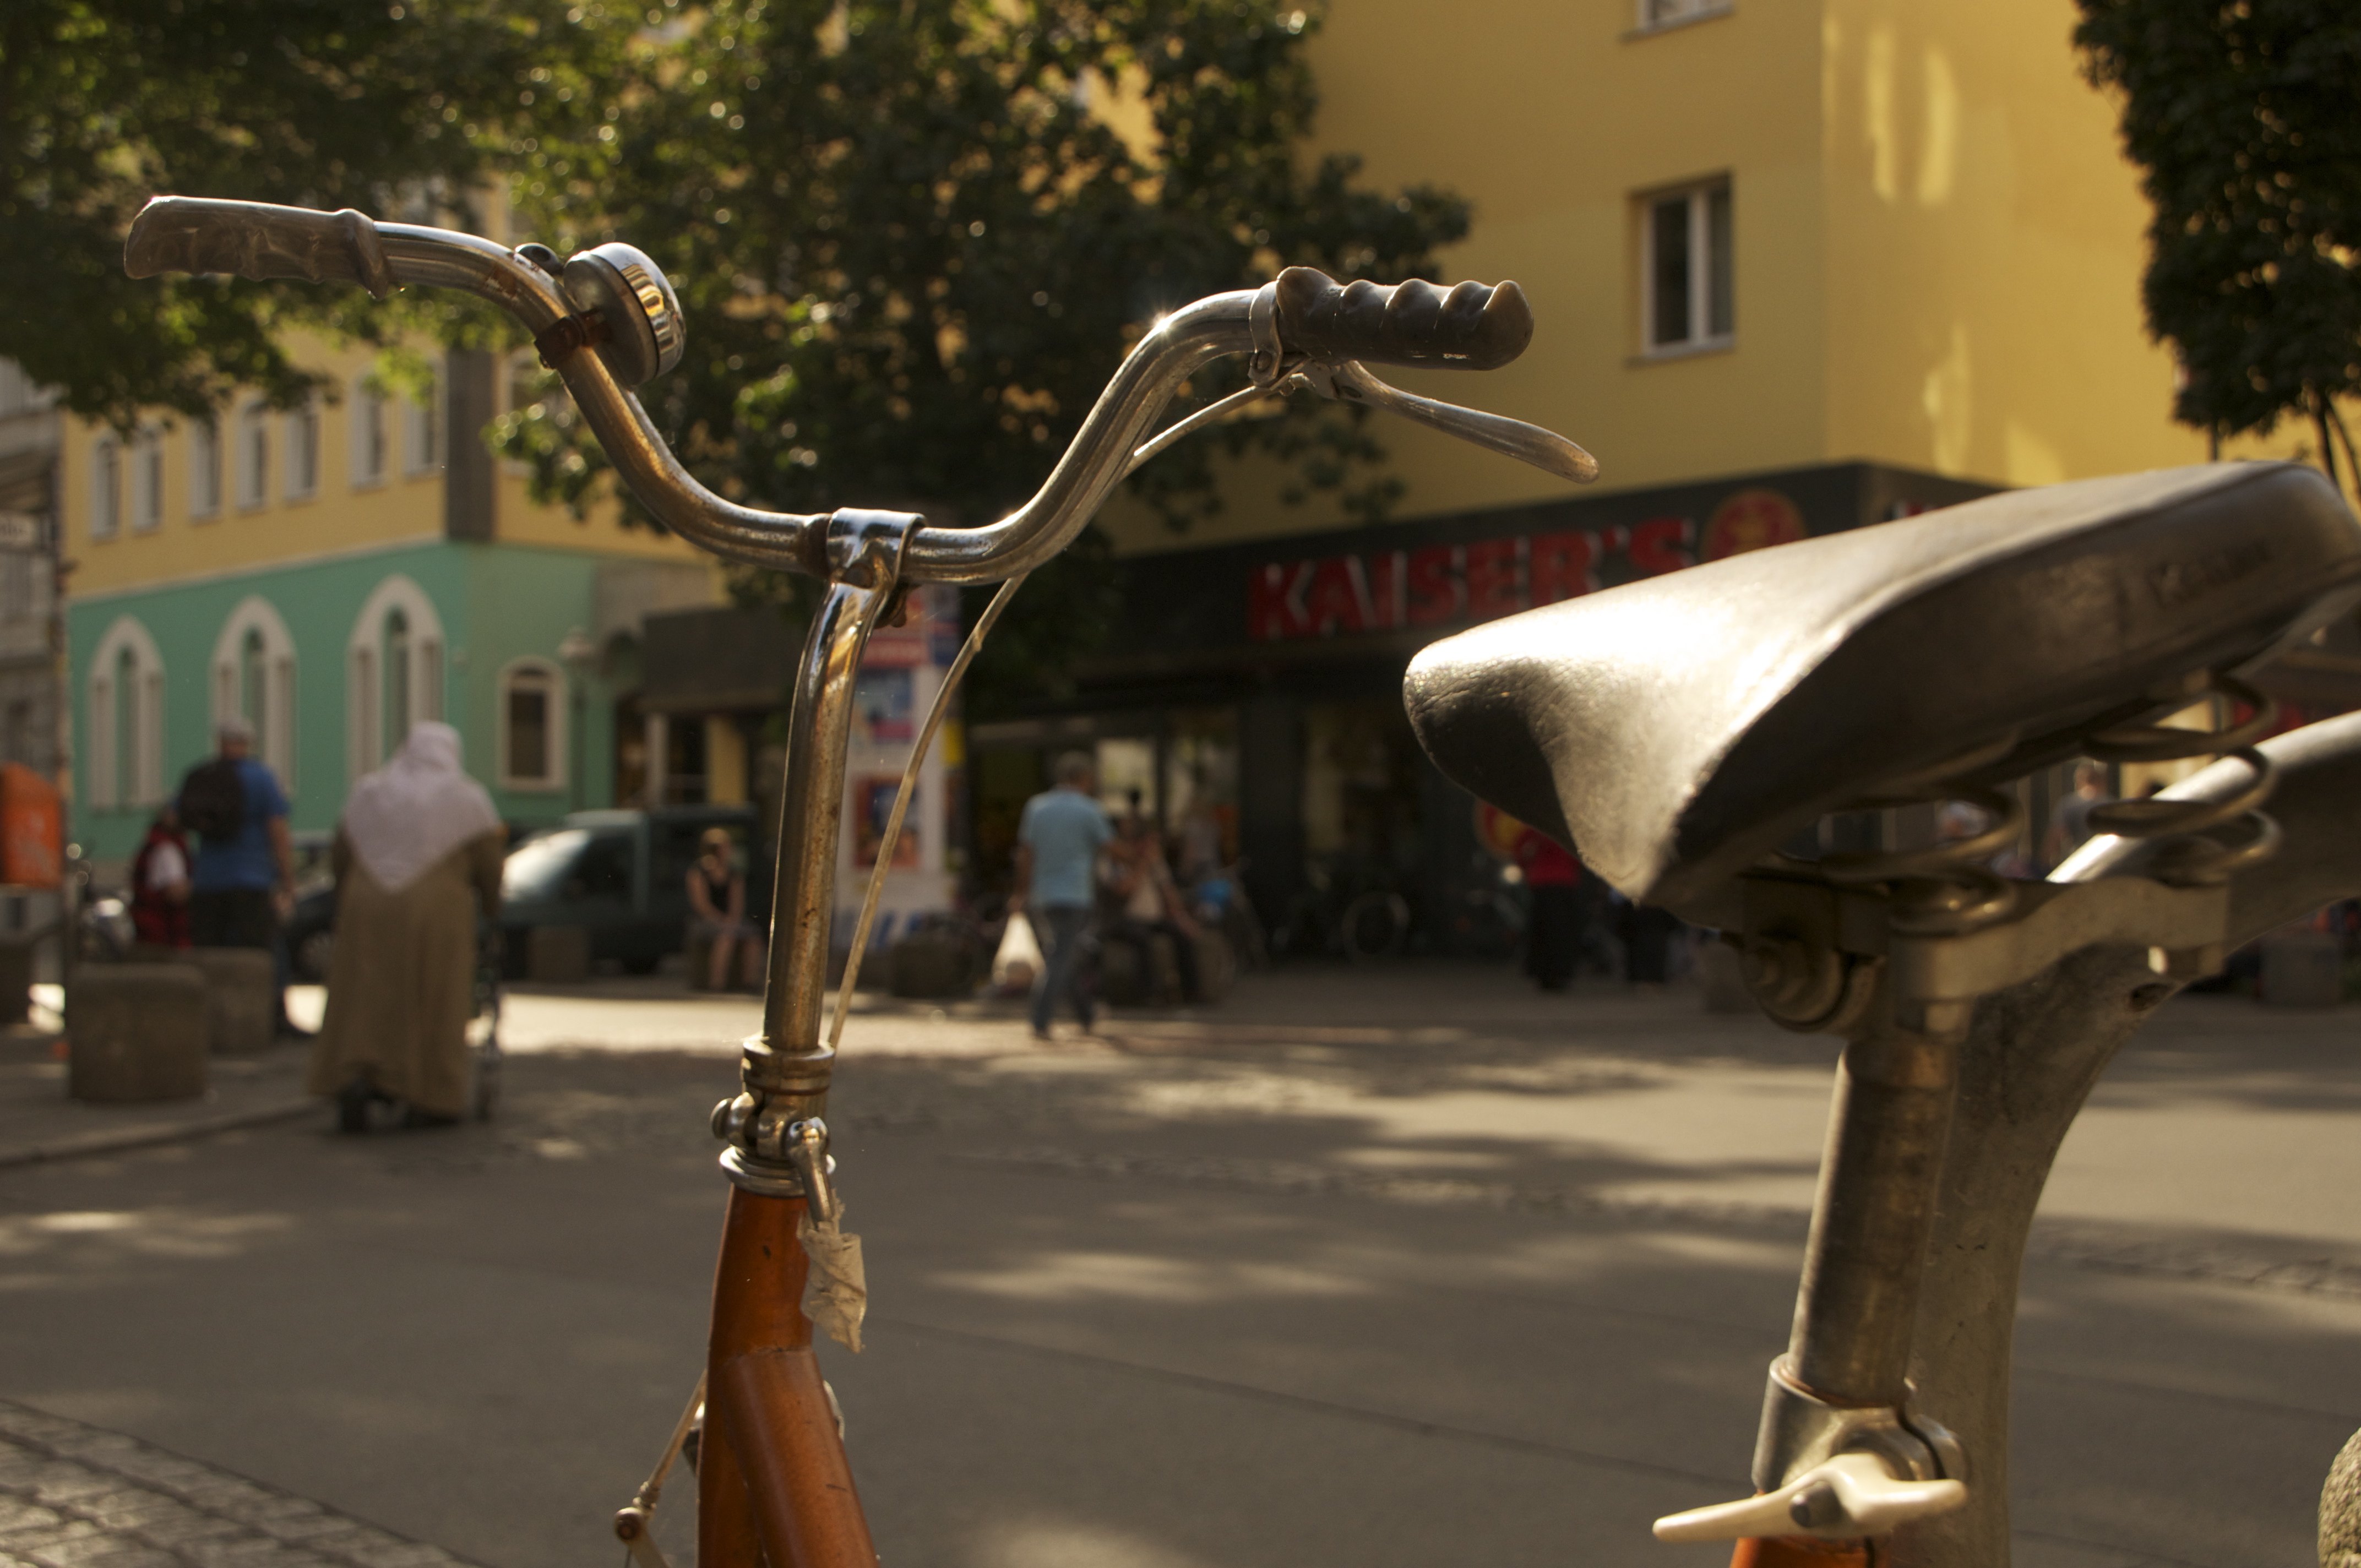 Bike-able Berlin